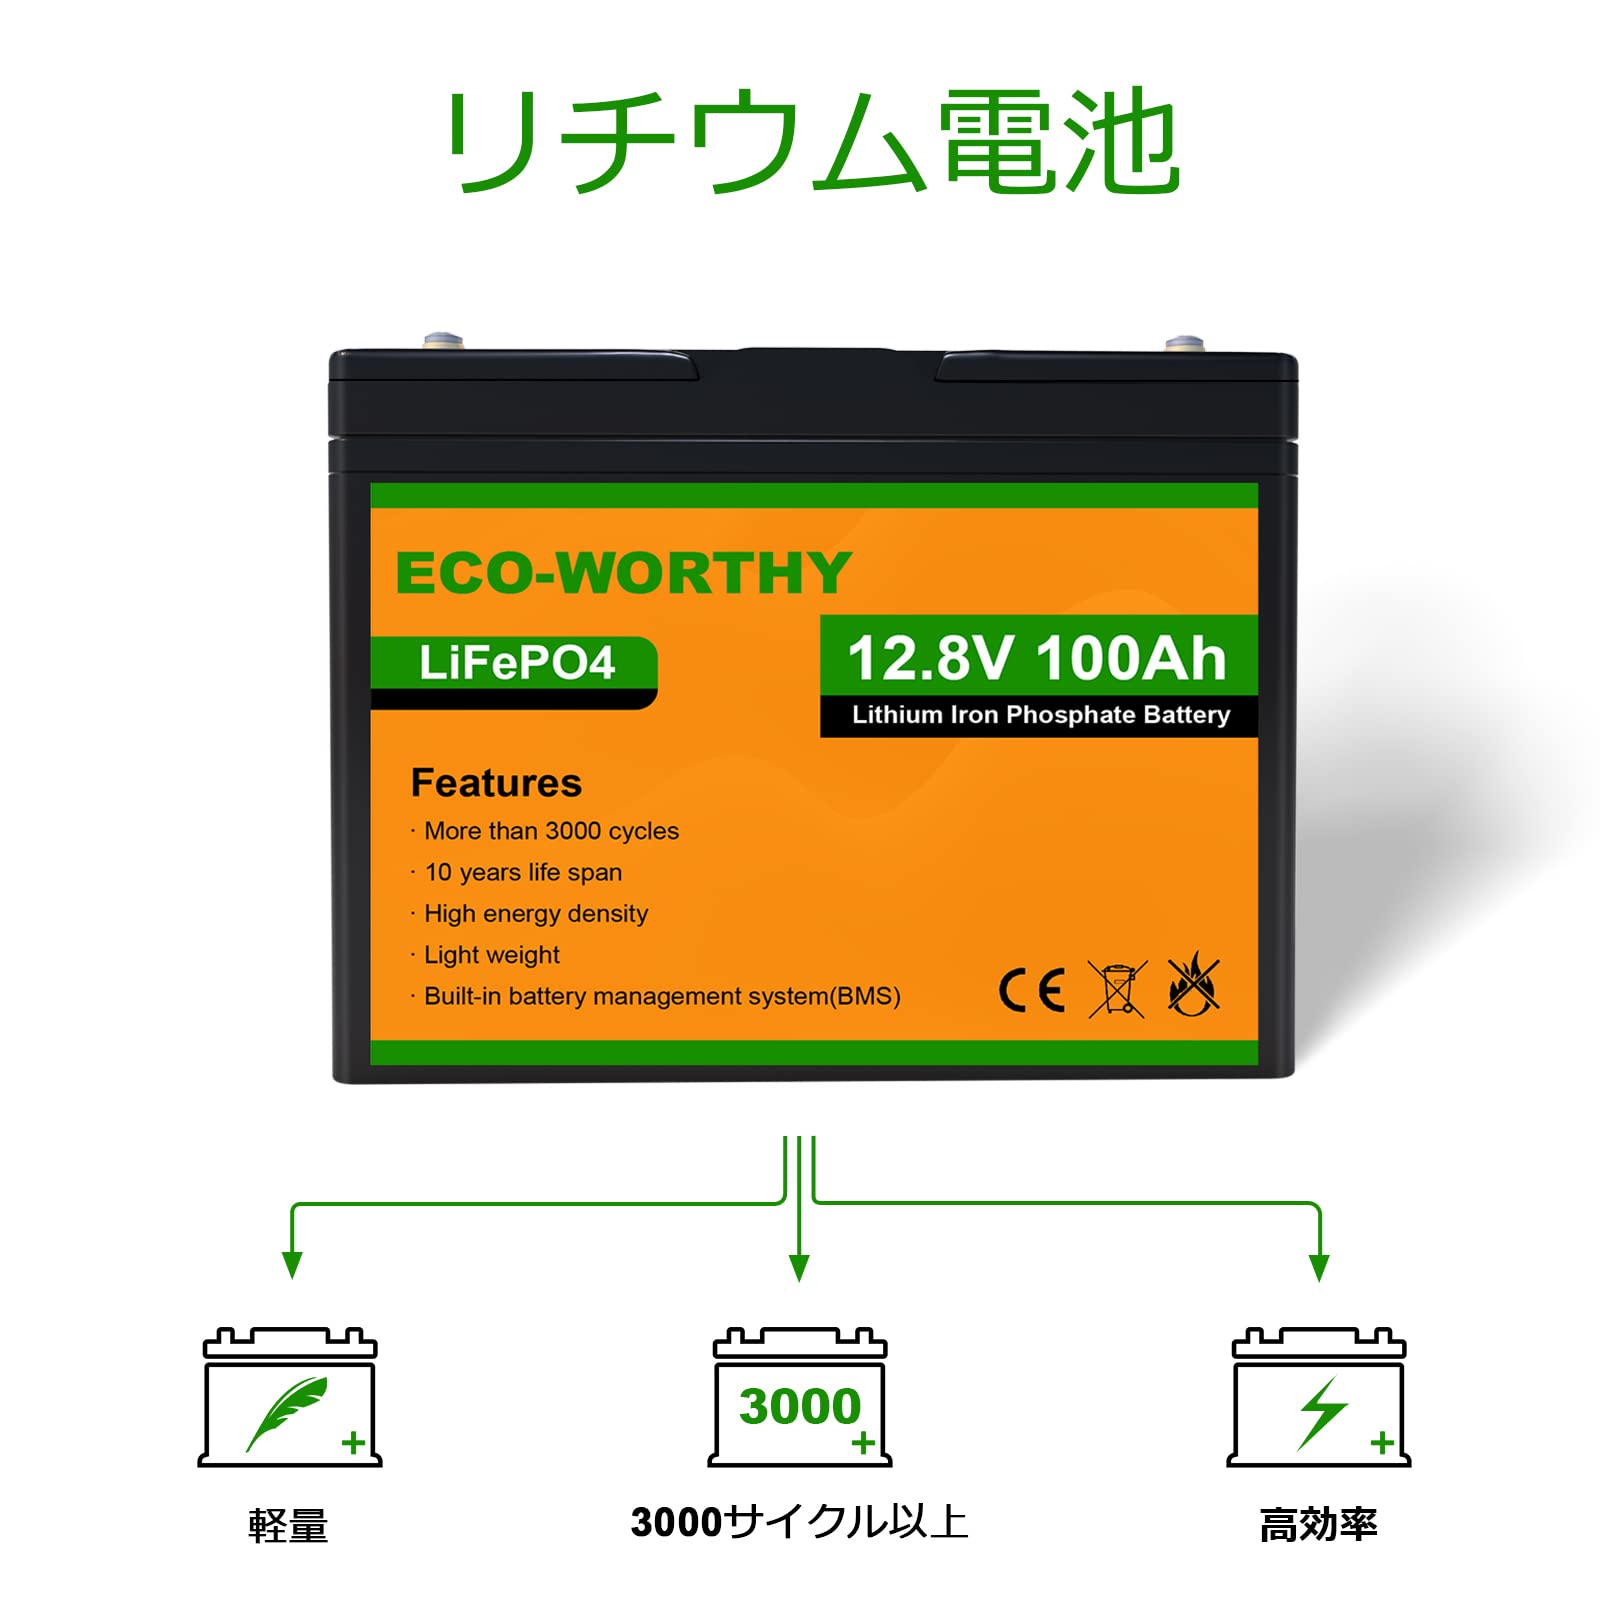 800W ソーラーパネルキット 100Ahリチウム蓄電池 1100wインバーター 付属 家庭用蓄電池 自家発電 ECO-WORTHY SEKIYA